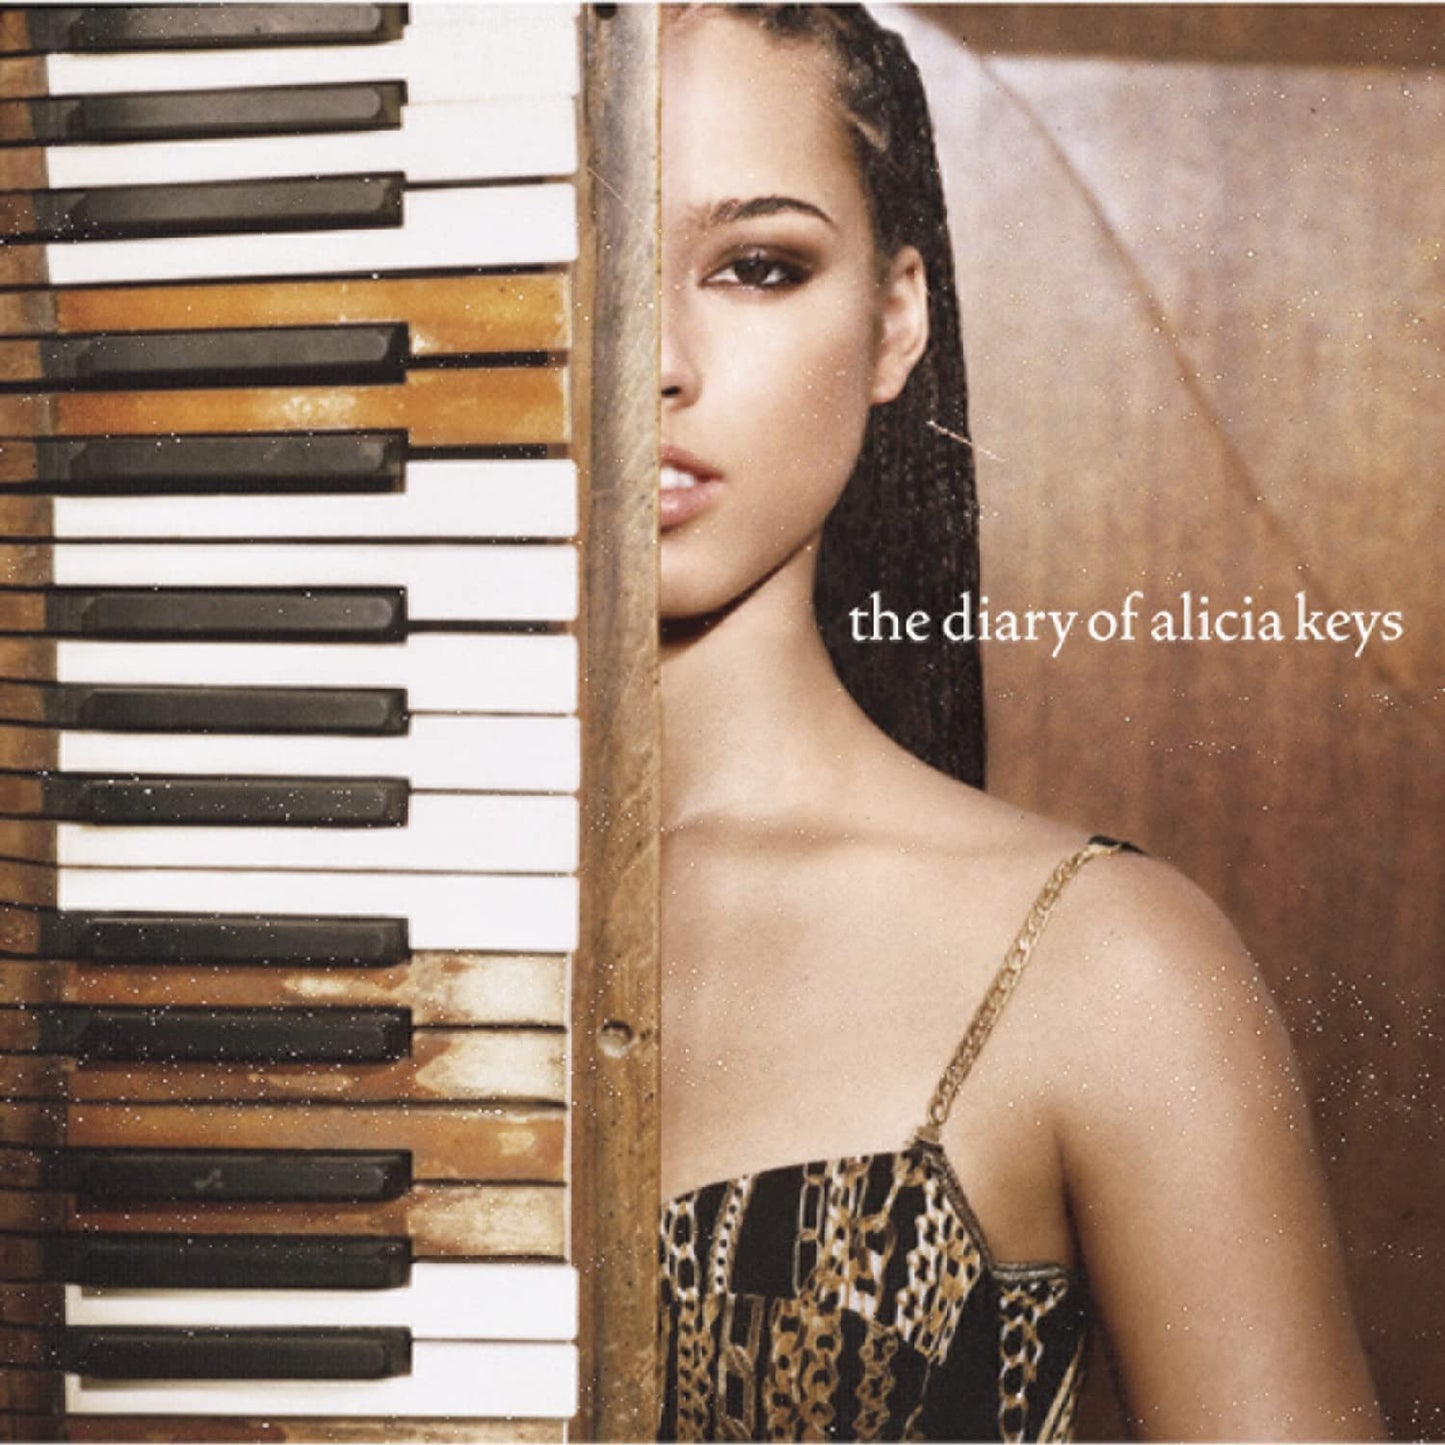 The Diary of Alicia Keys (Limited Edition with Bonus DVD) [Audio CD] Alicia Keys